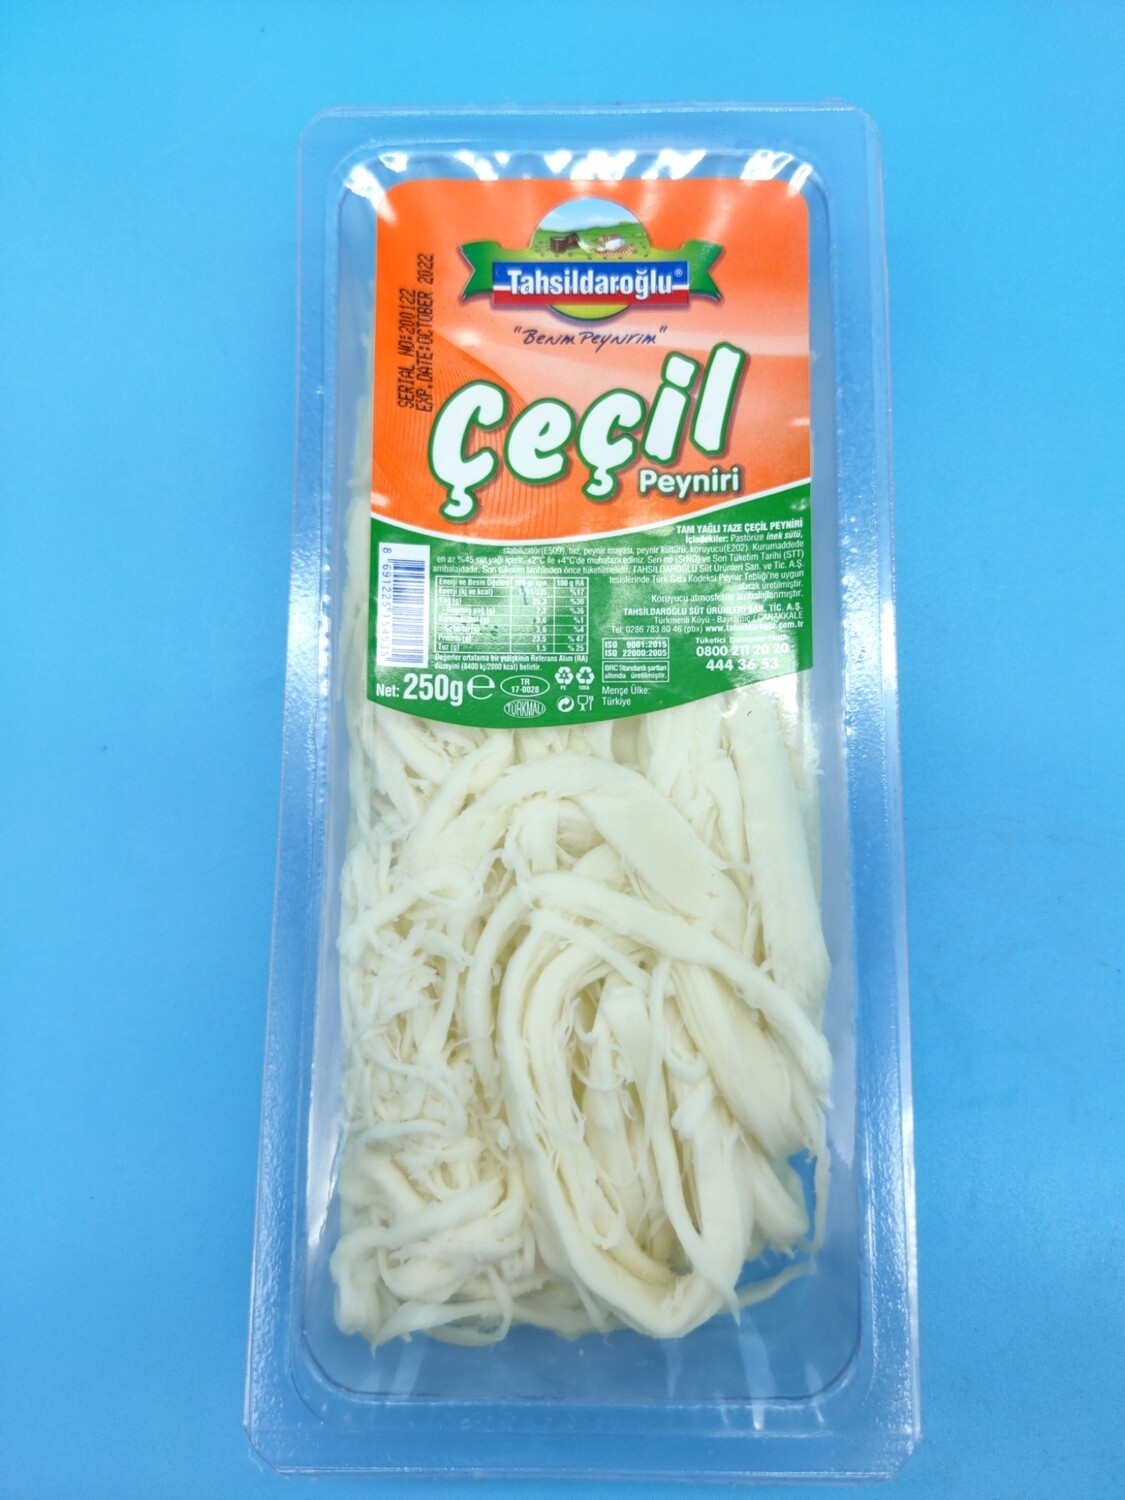 Tahsildaroglu Cecil Checil Cheese Peyniri 250g vac pack